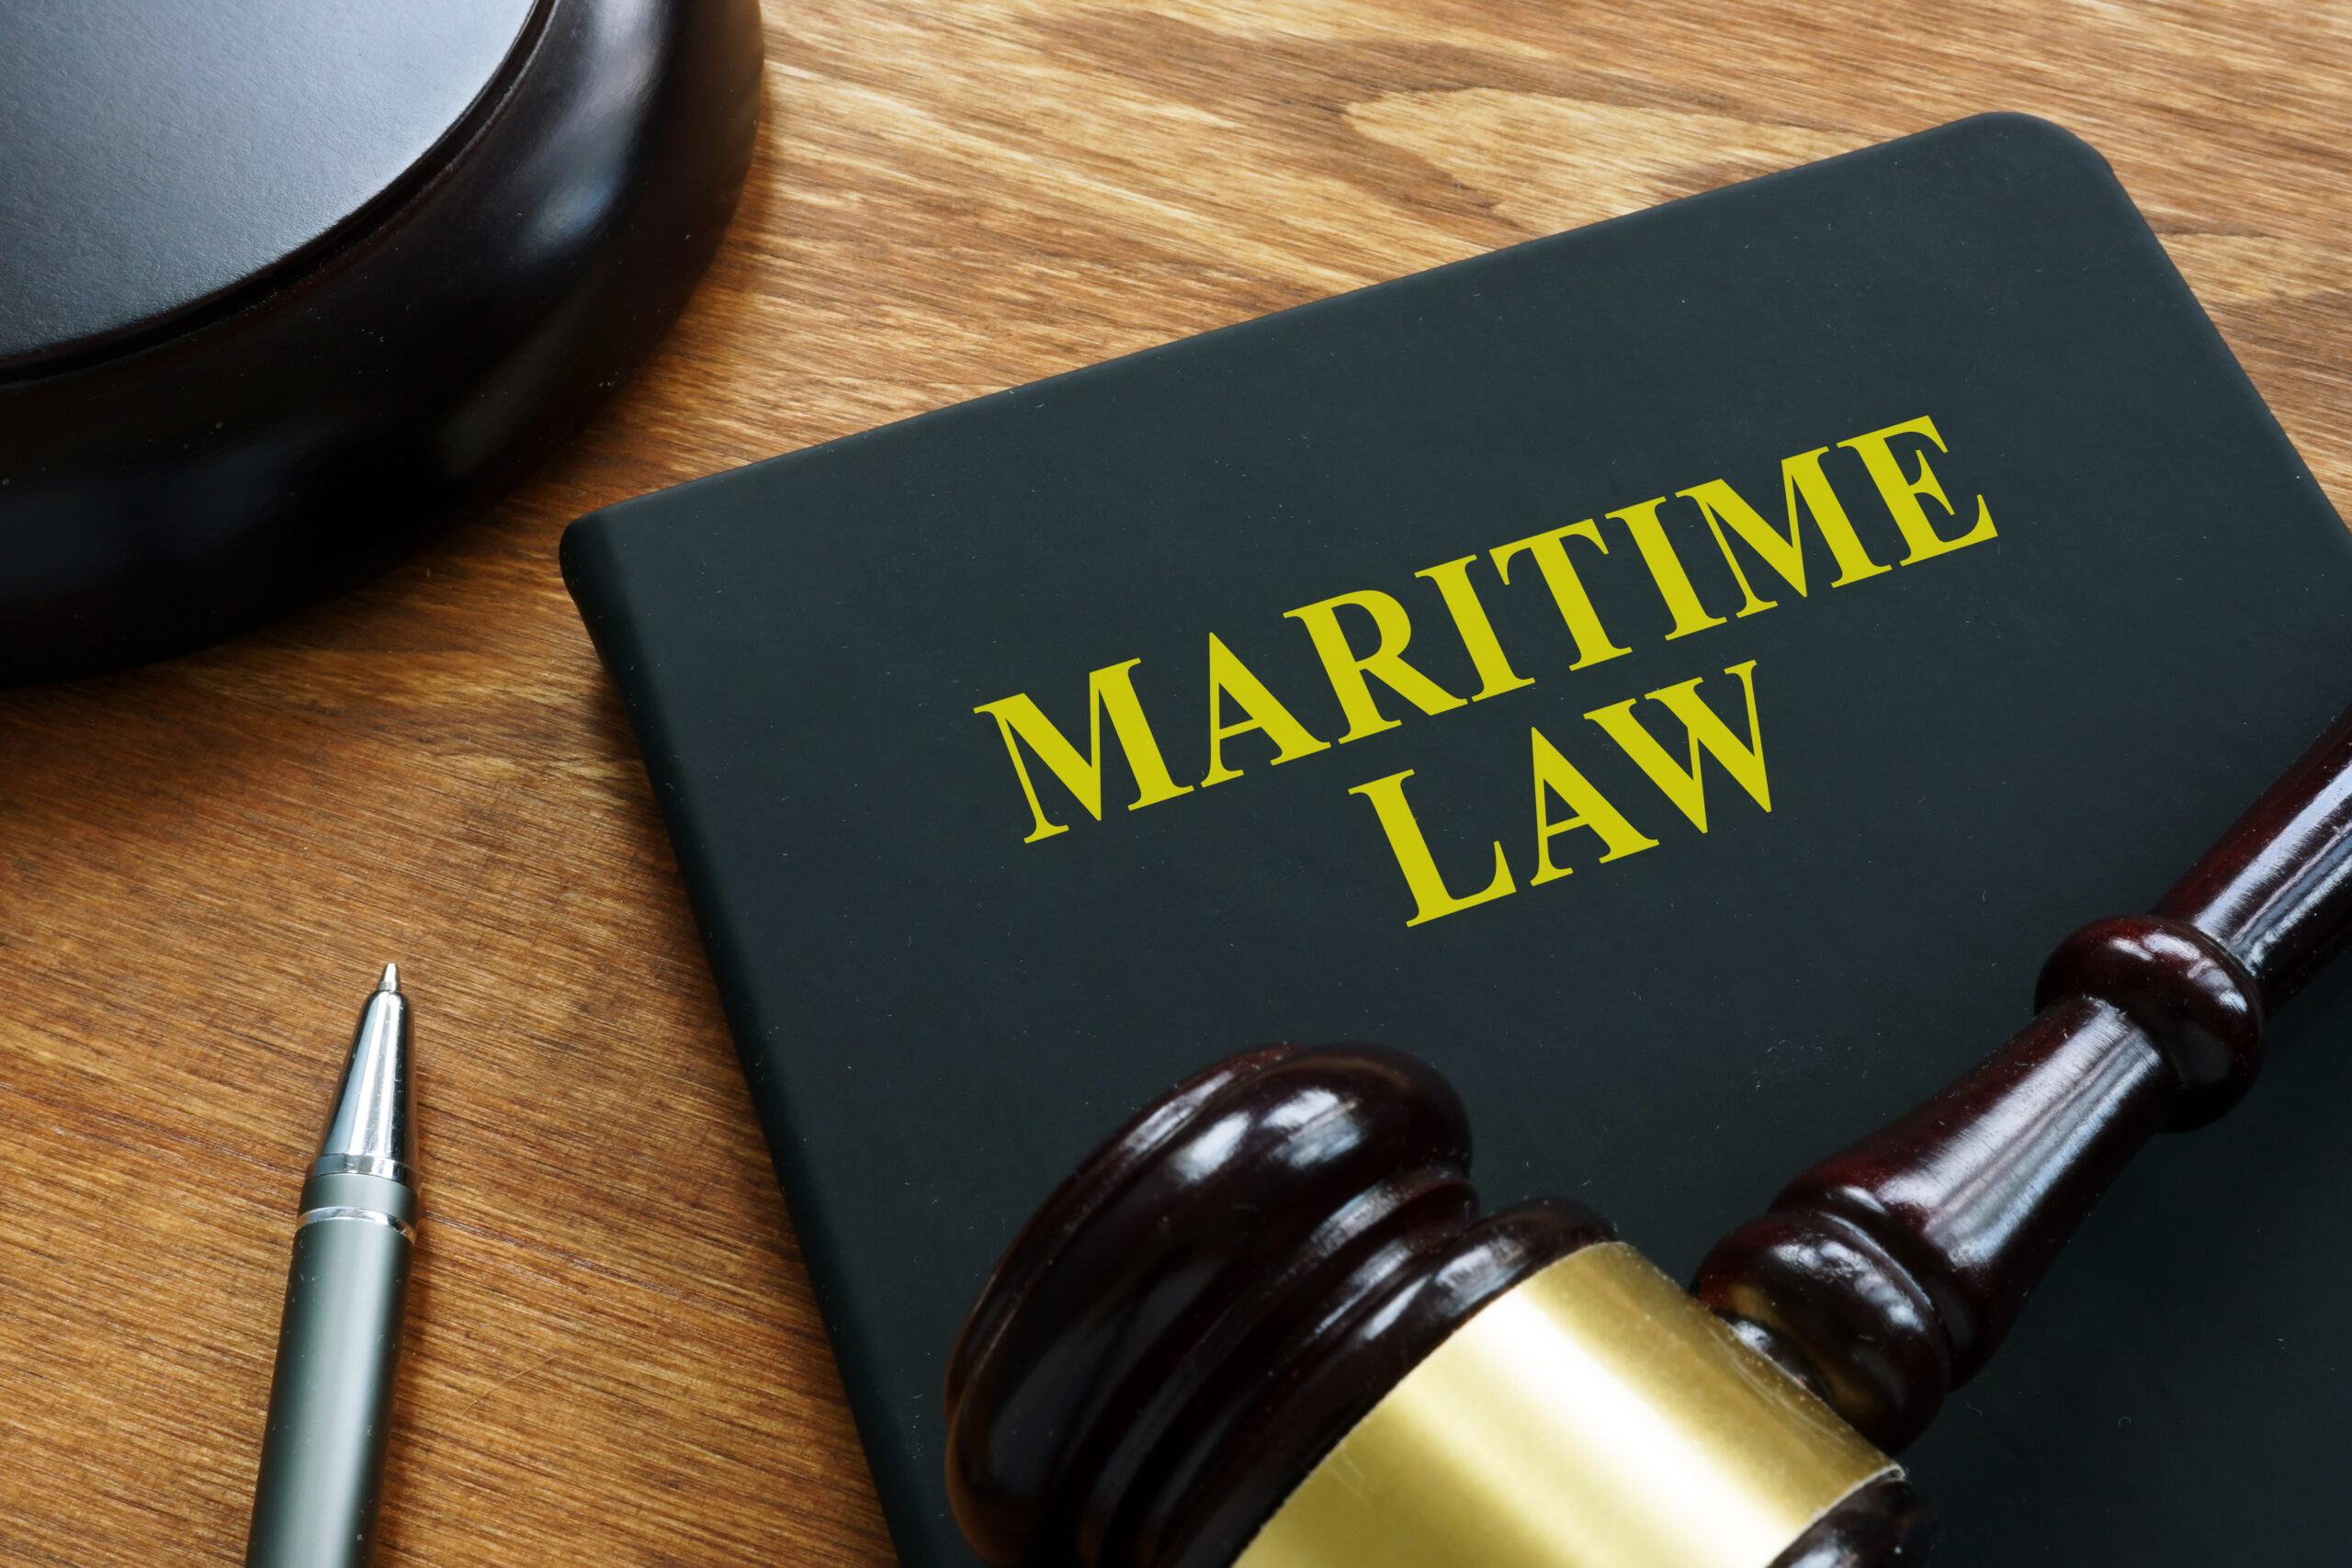 phd scholarship in maritime law